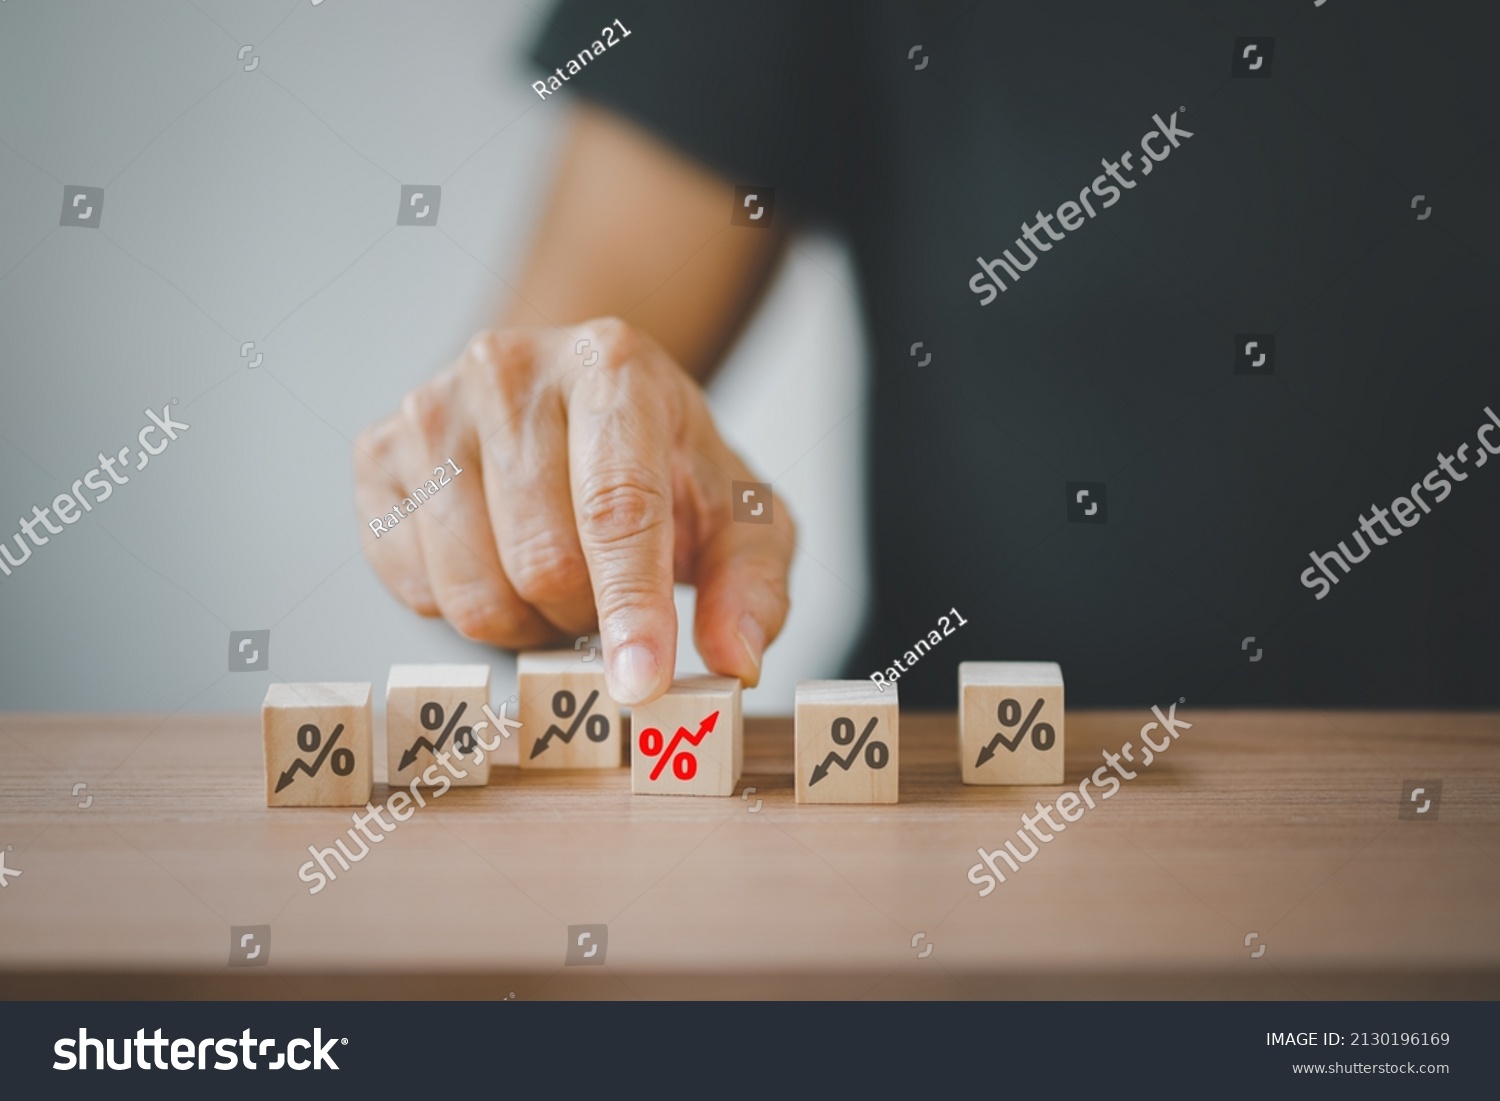 senior hand choosing red increasing percent among black decreasing percent on wooden desk, business development, increasing interest, payment, profit concept #2130196169